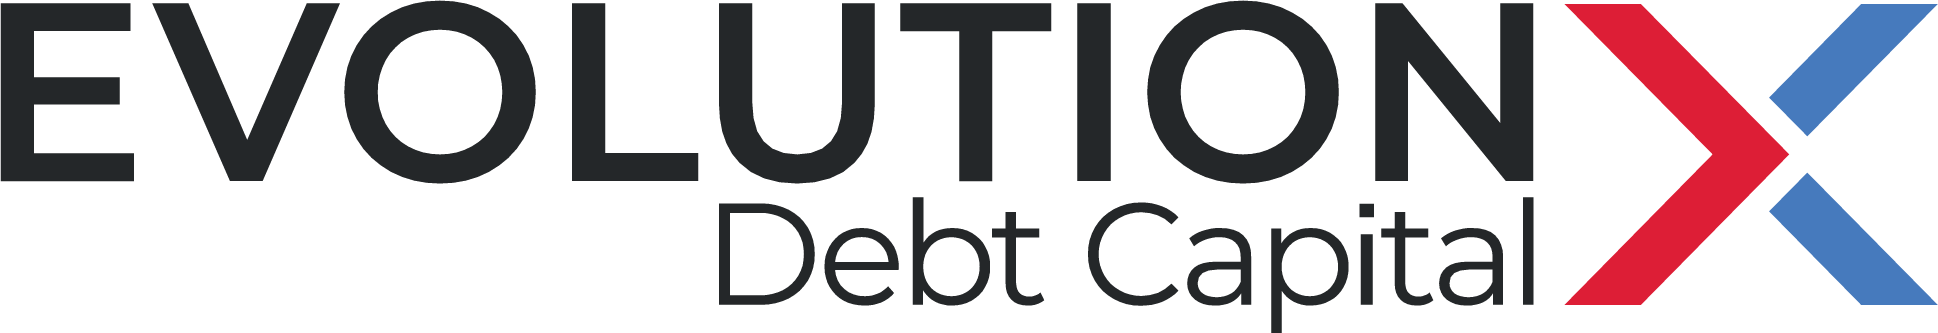 Evolutionx Debt Capital